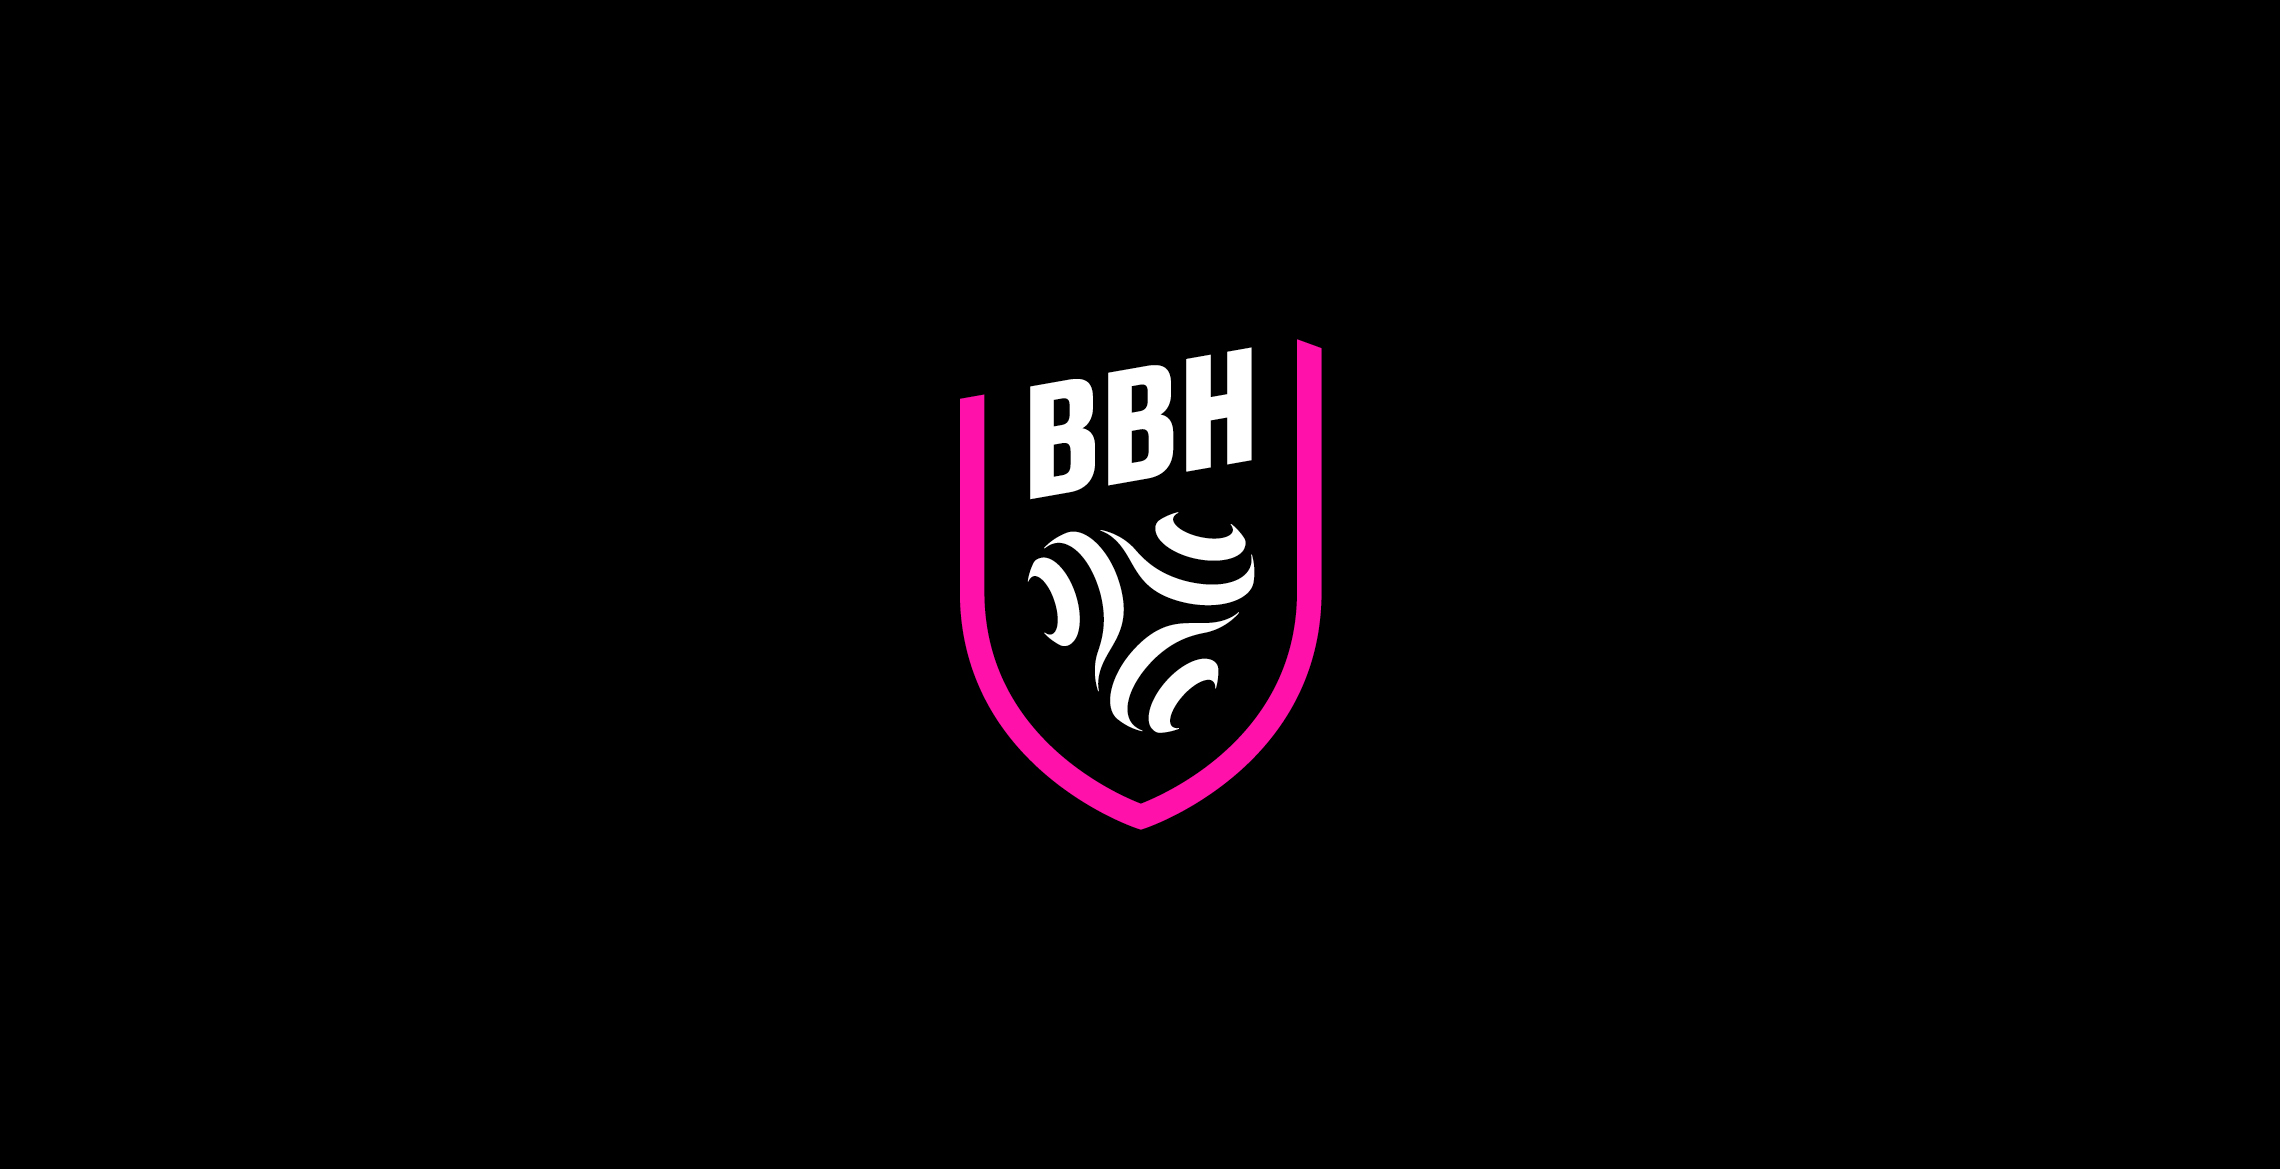 Club handball Brest BBH Branding communication